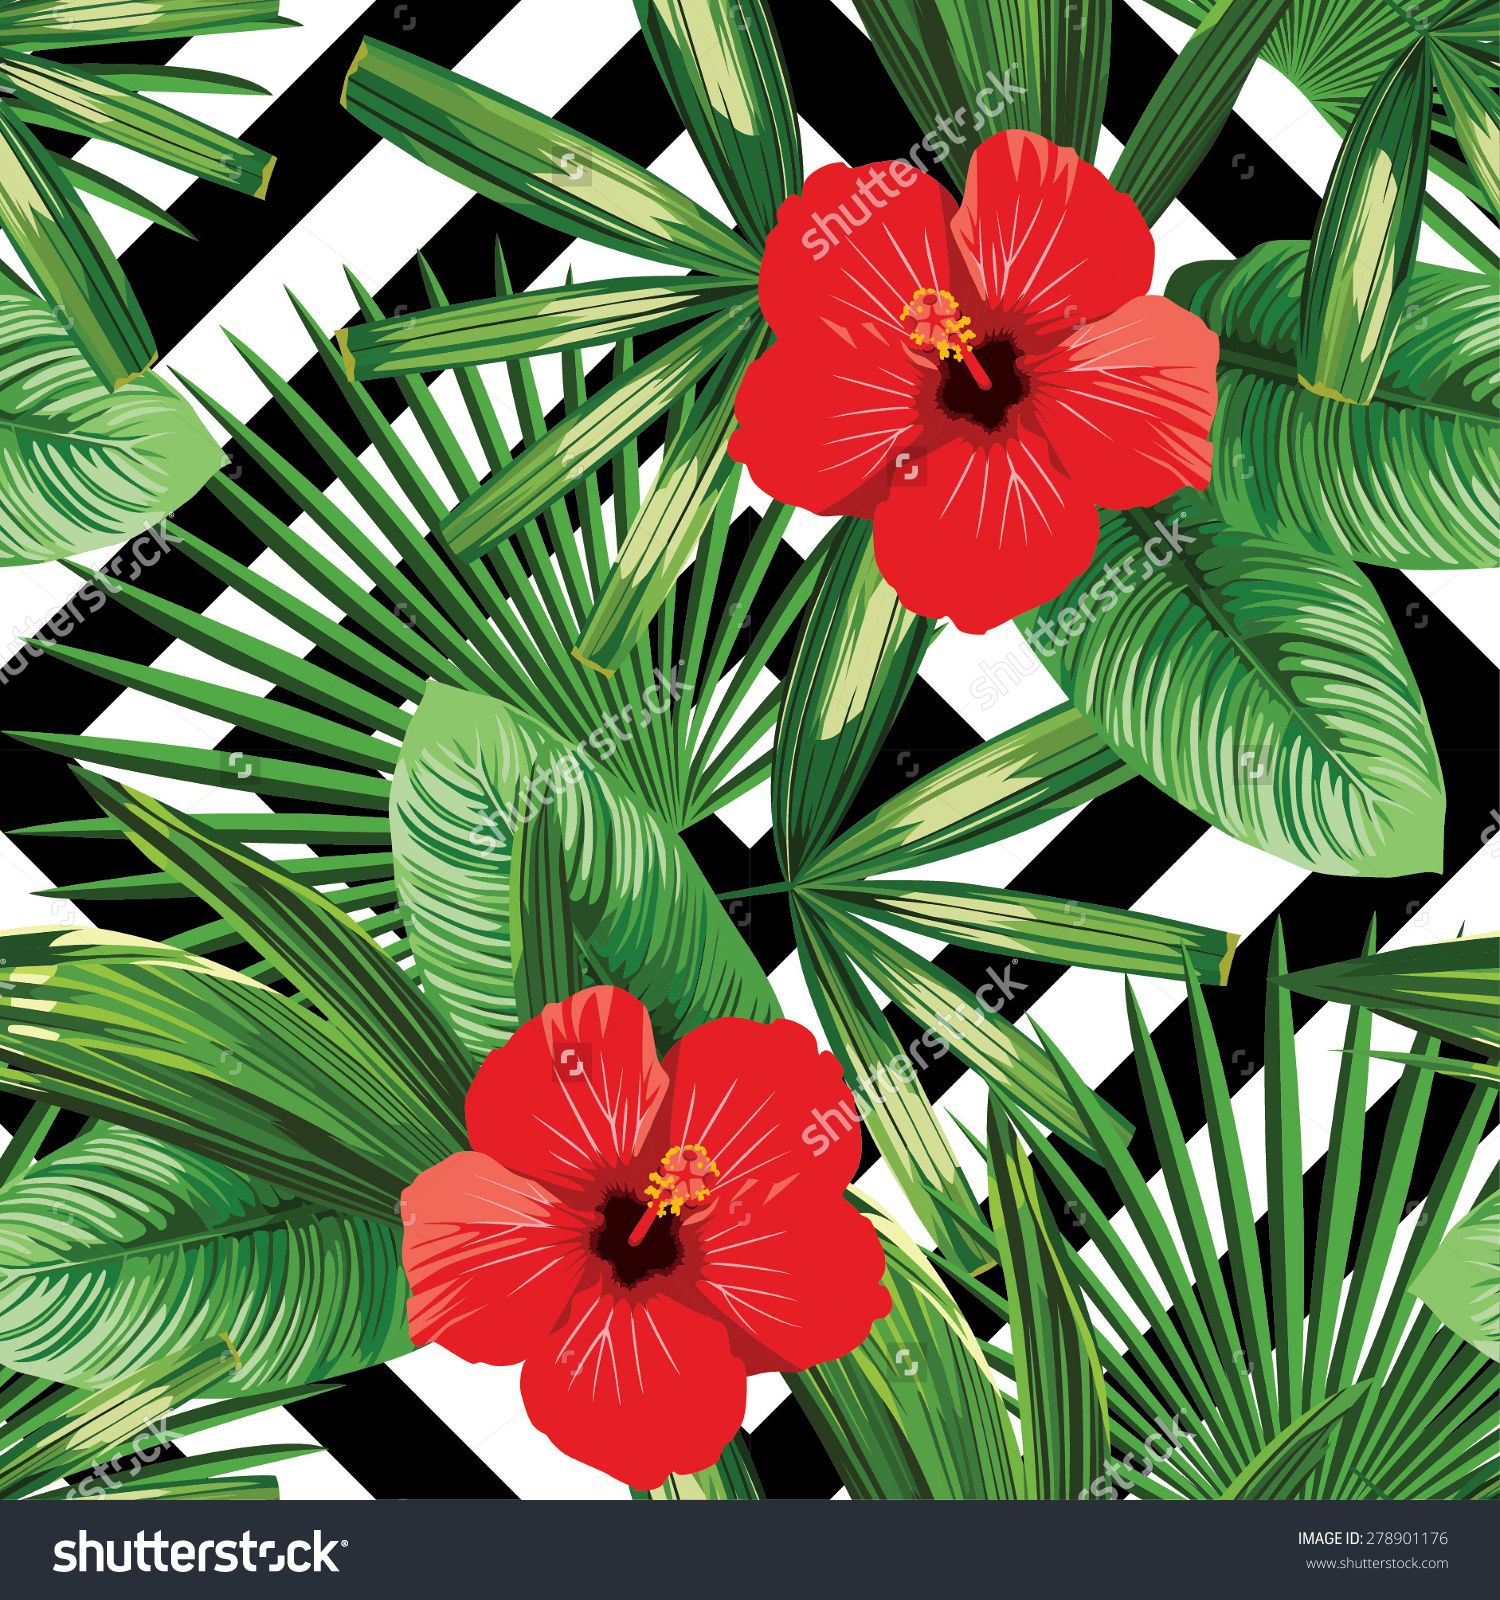 Pin by Kimberly rochin on HAWAIIAN HIBISCUS | Pinterest | Hibiscus